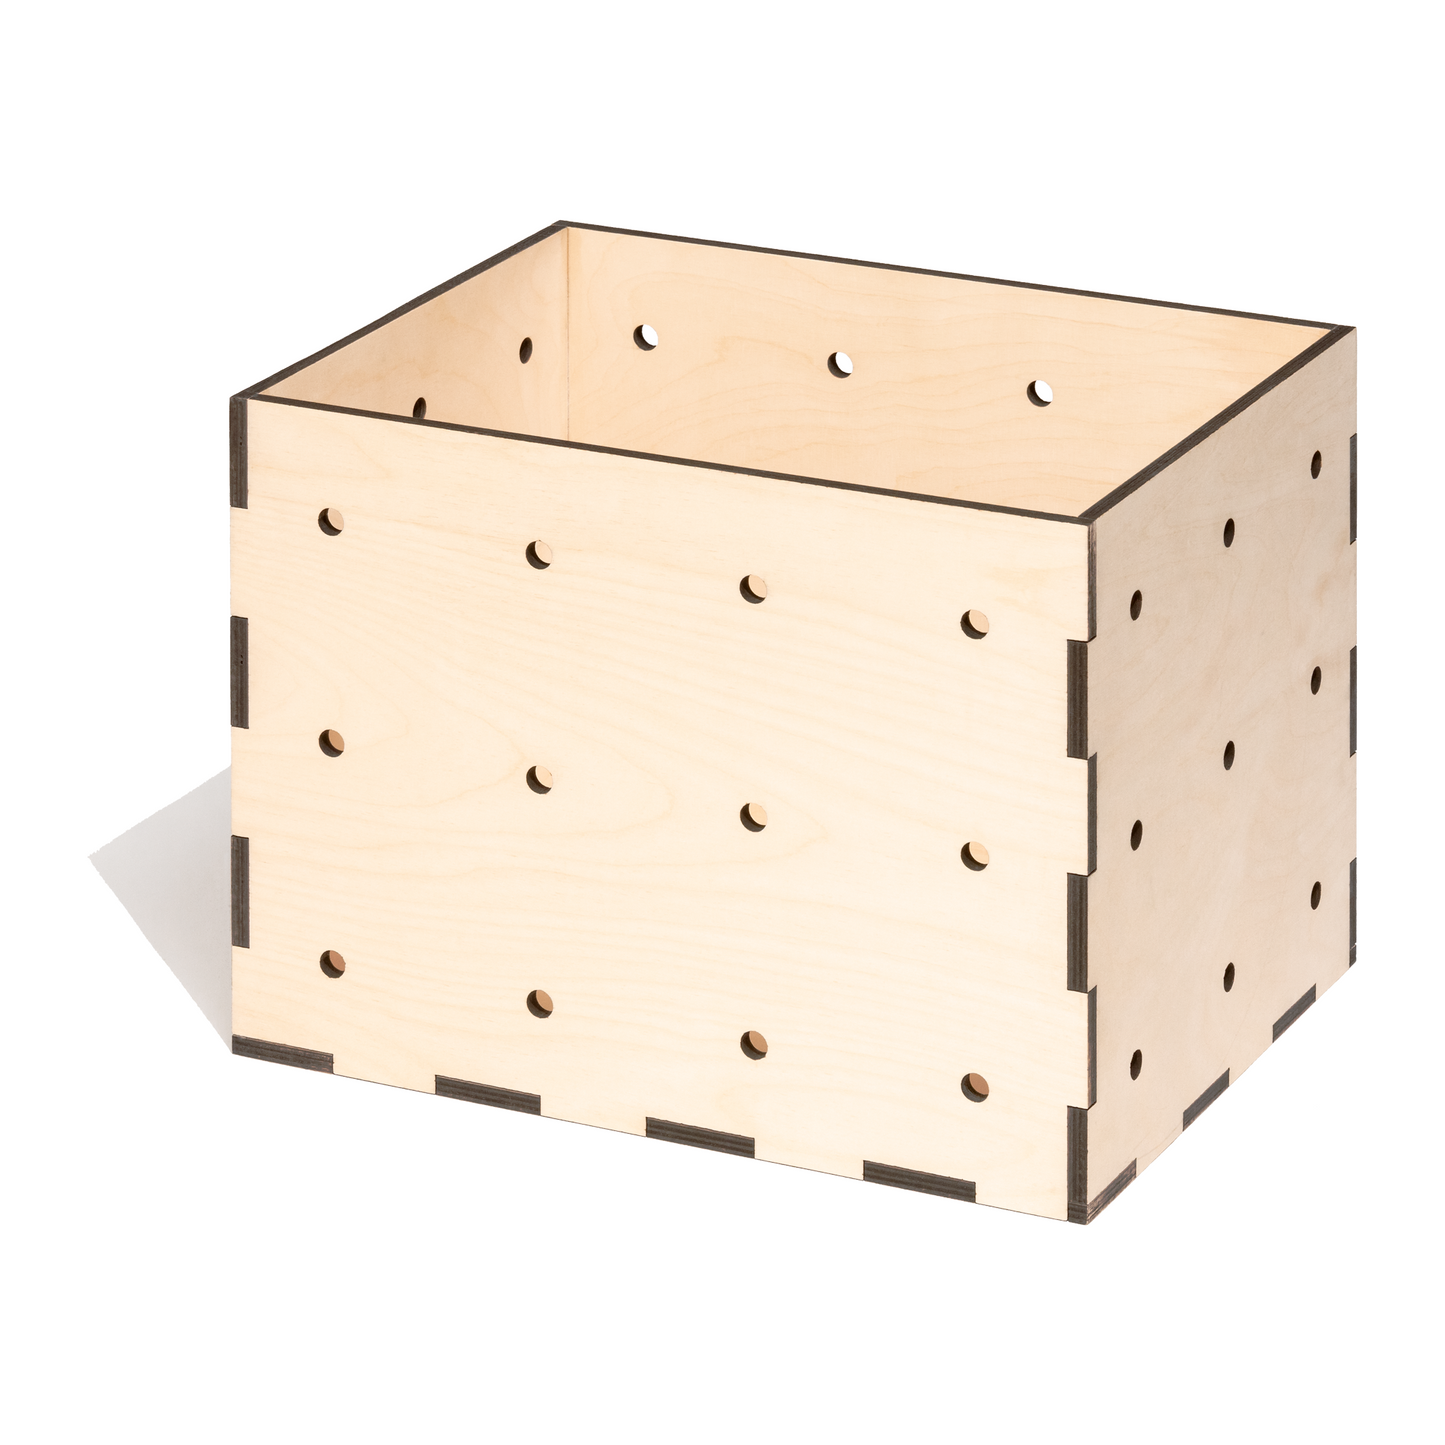 Kiste aus Holz im Euroformat 40 x 30 x 30 cm